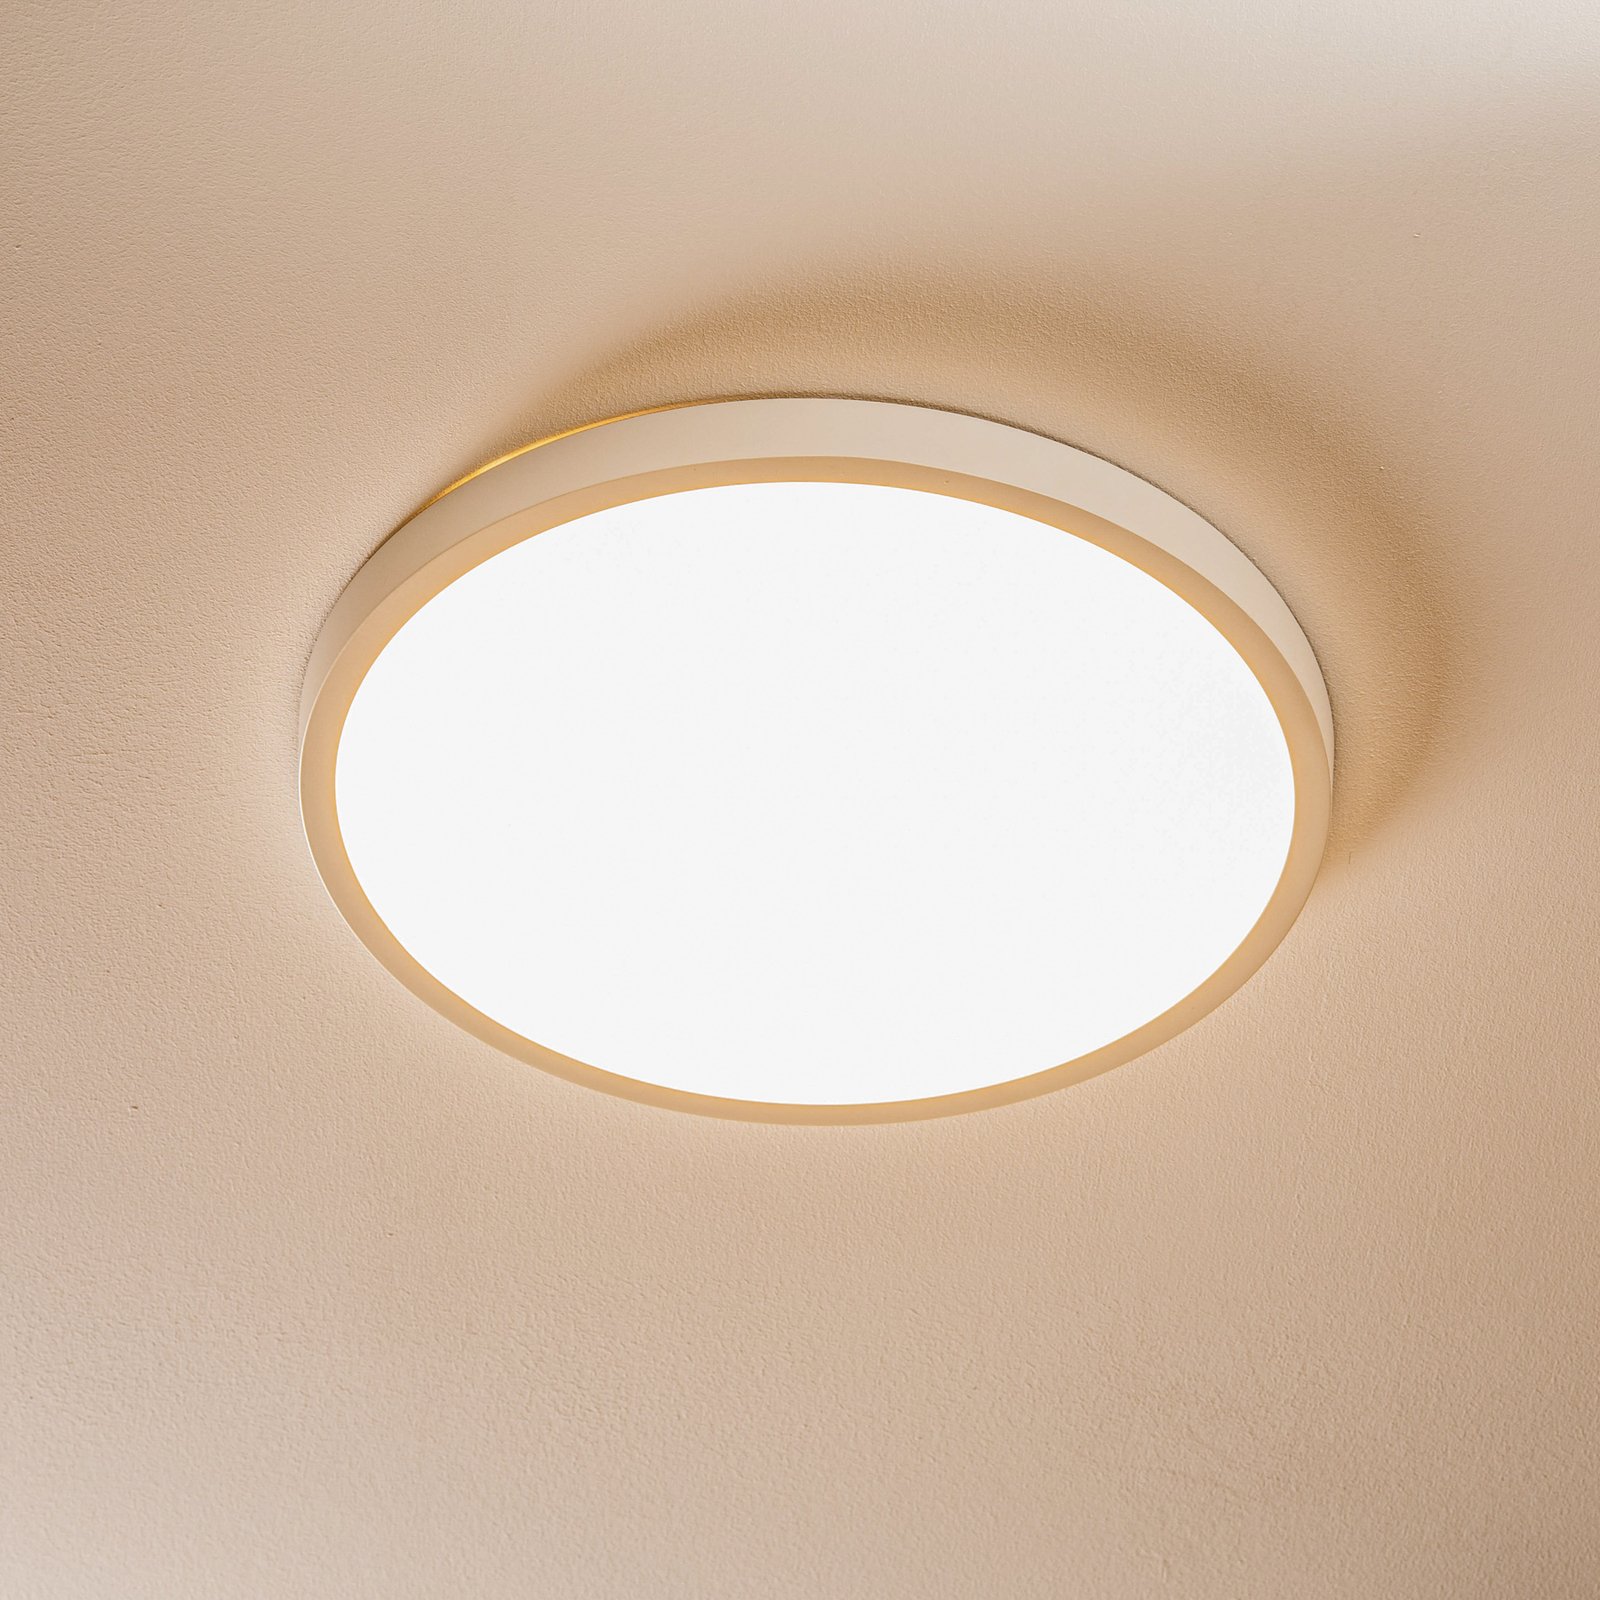 Ultra-flat LED ceiling light Lero Ø 40 cm